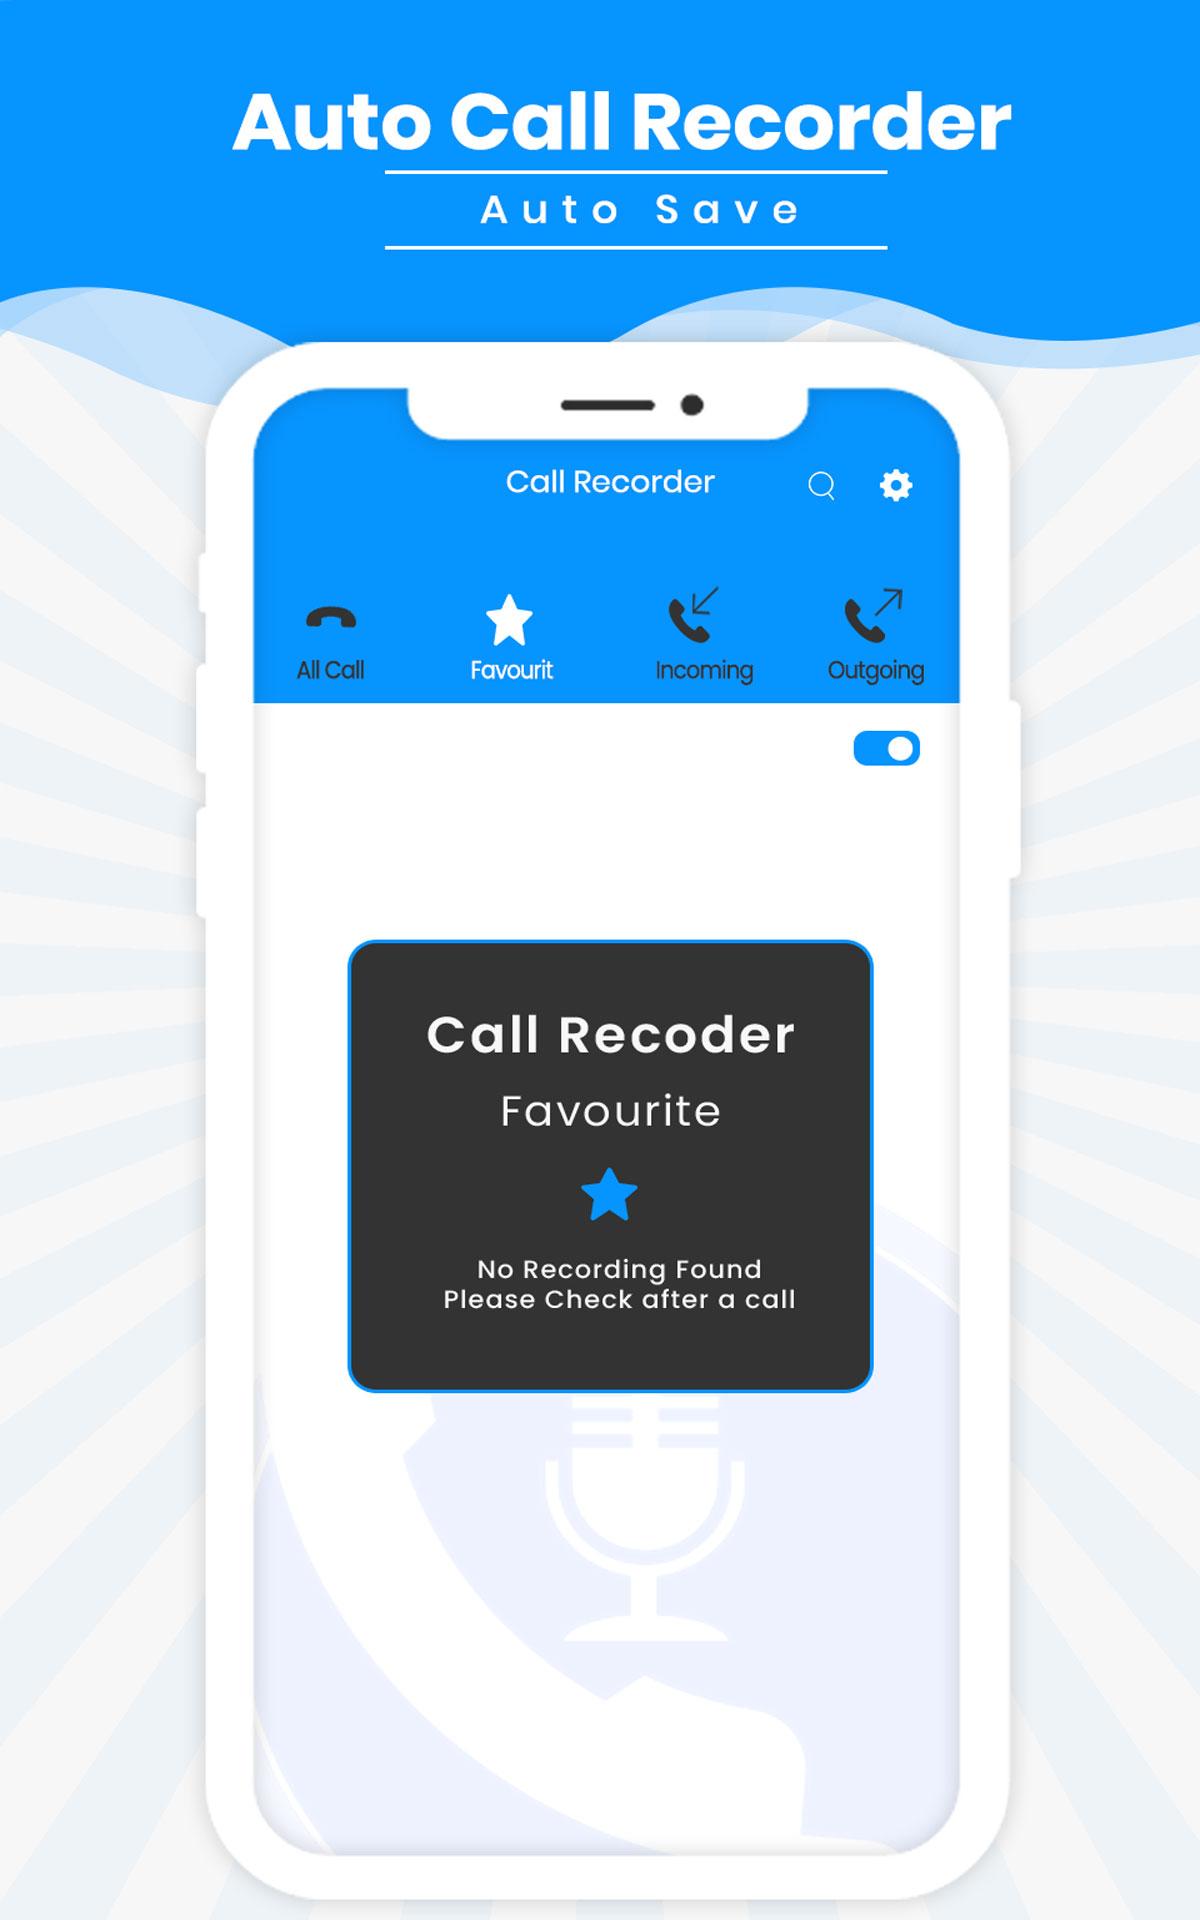 Auto Call Recorder - Auto Save 1.0.4 Screenshot 10